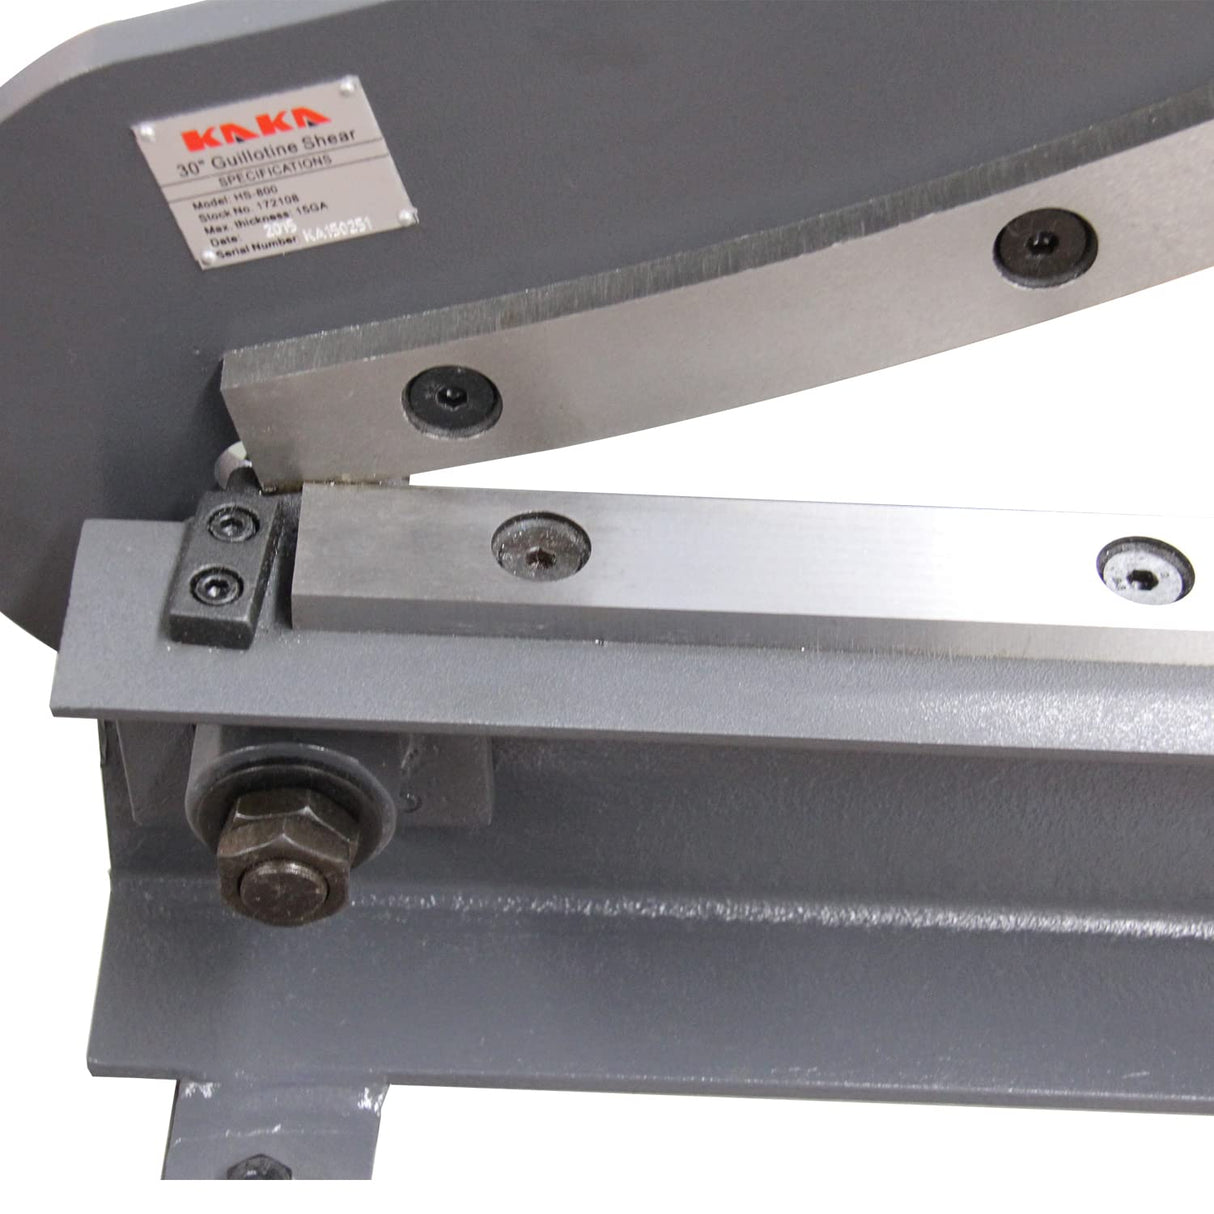 KANG Industrial HS-30 Guillotine Metal Shear, 800mm Bed Width, 1.5mm Metal Guillotine Shear